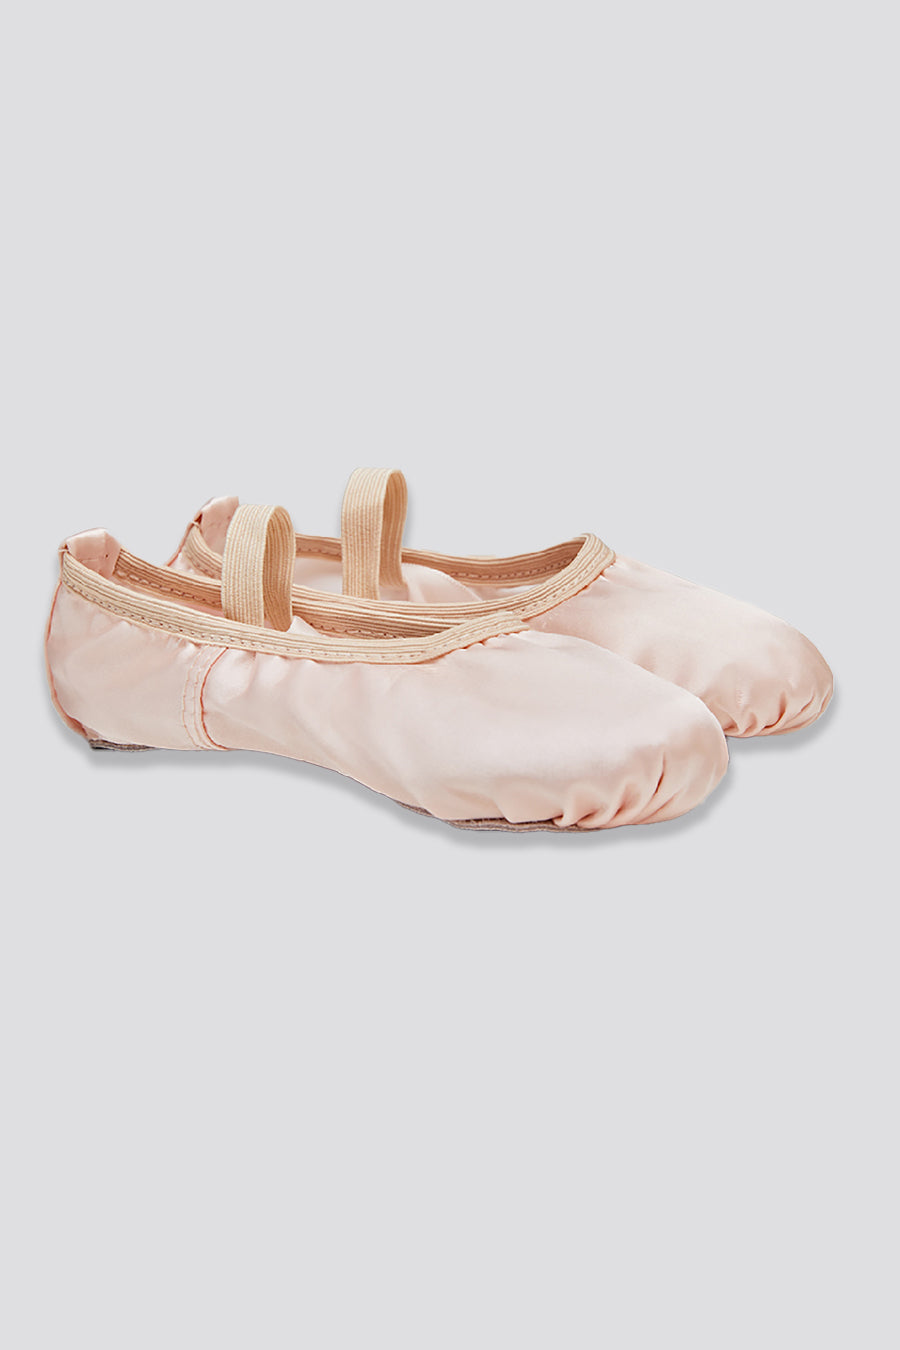 Stelle Girls Ballet Practice Shoes